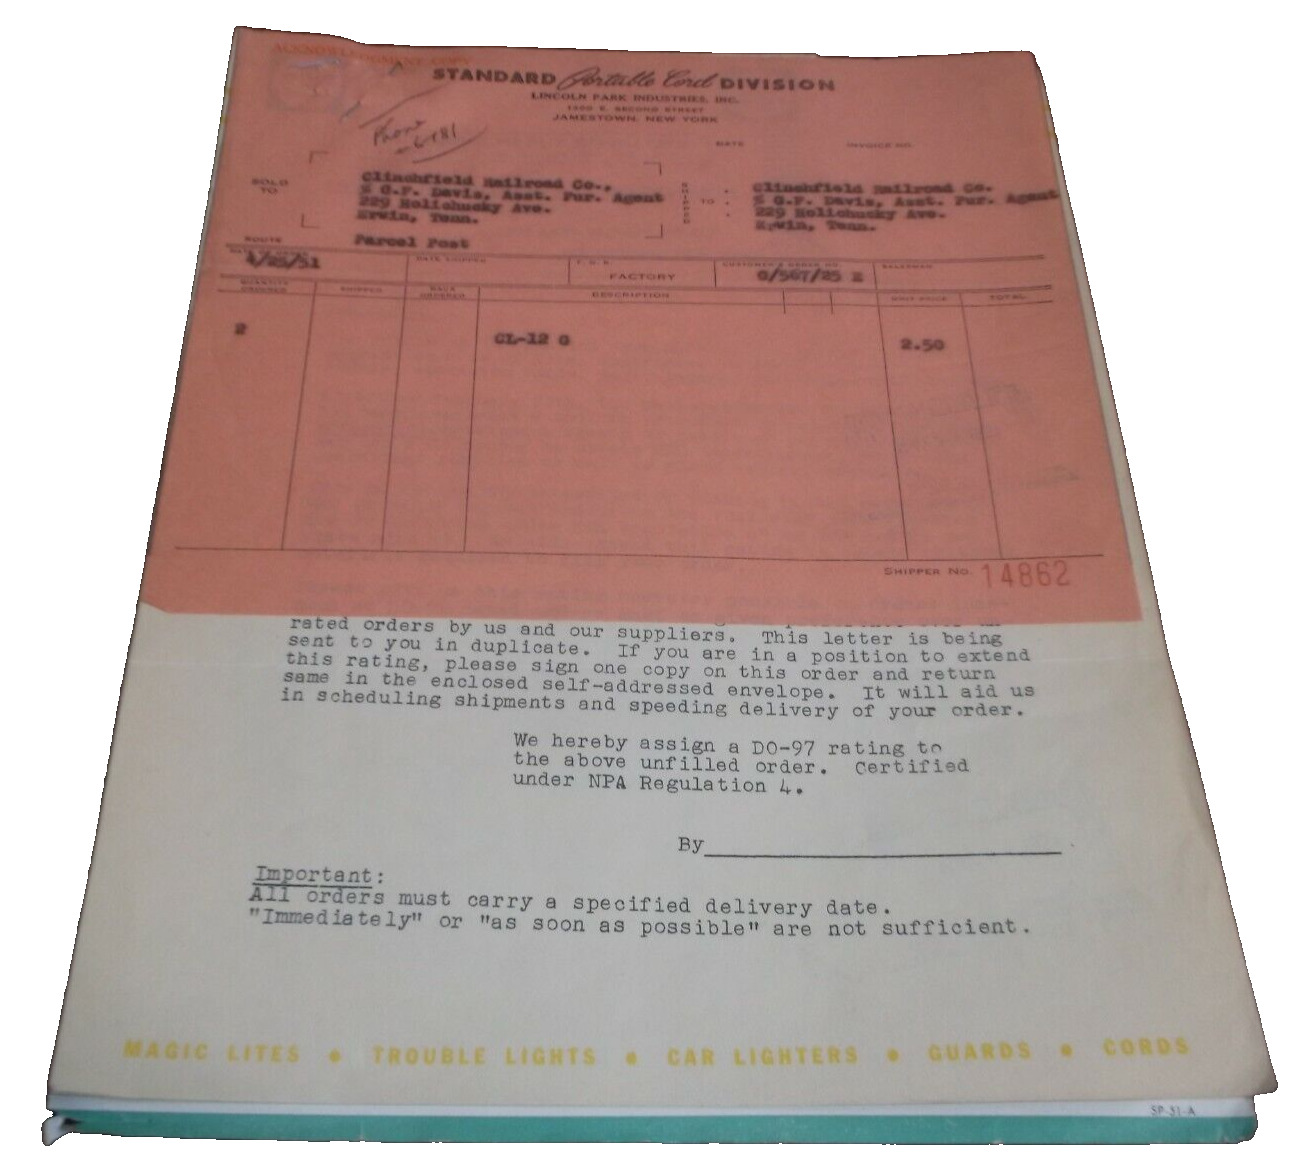 APRIL 1951 CLINCHFIELD RAILROAD PURCHASE ORDER STANDARD PORTABLE CORD